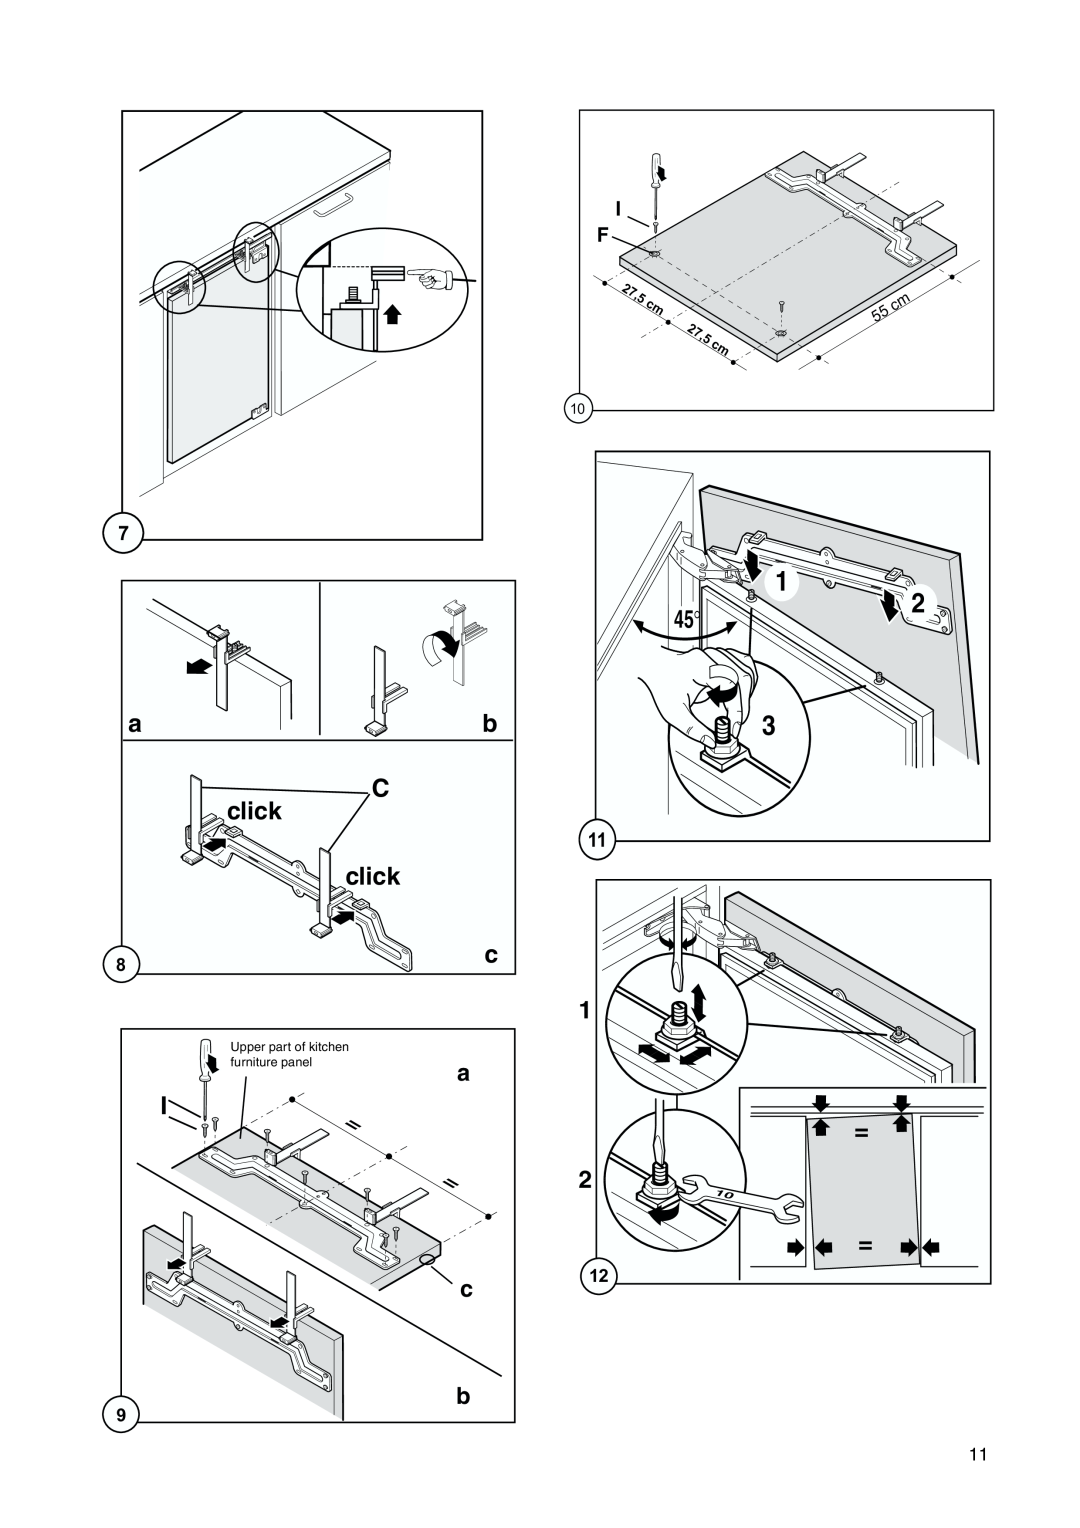 John Lewis JLBIUCF 01 instruction manual click, 27,5, Upper part of kitchen, furniture panel 